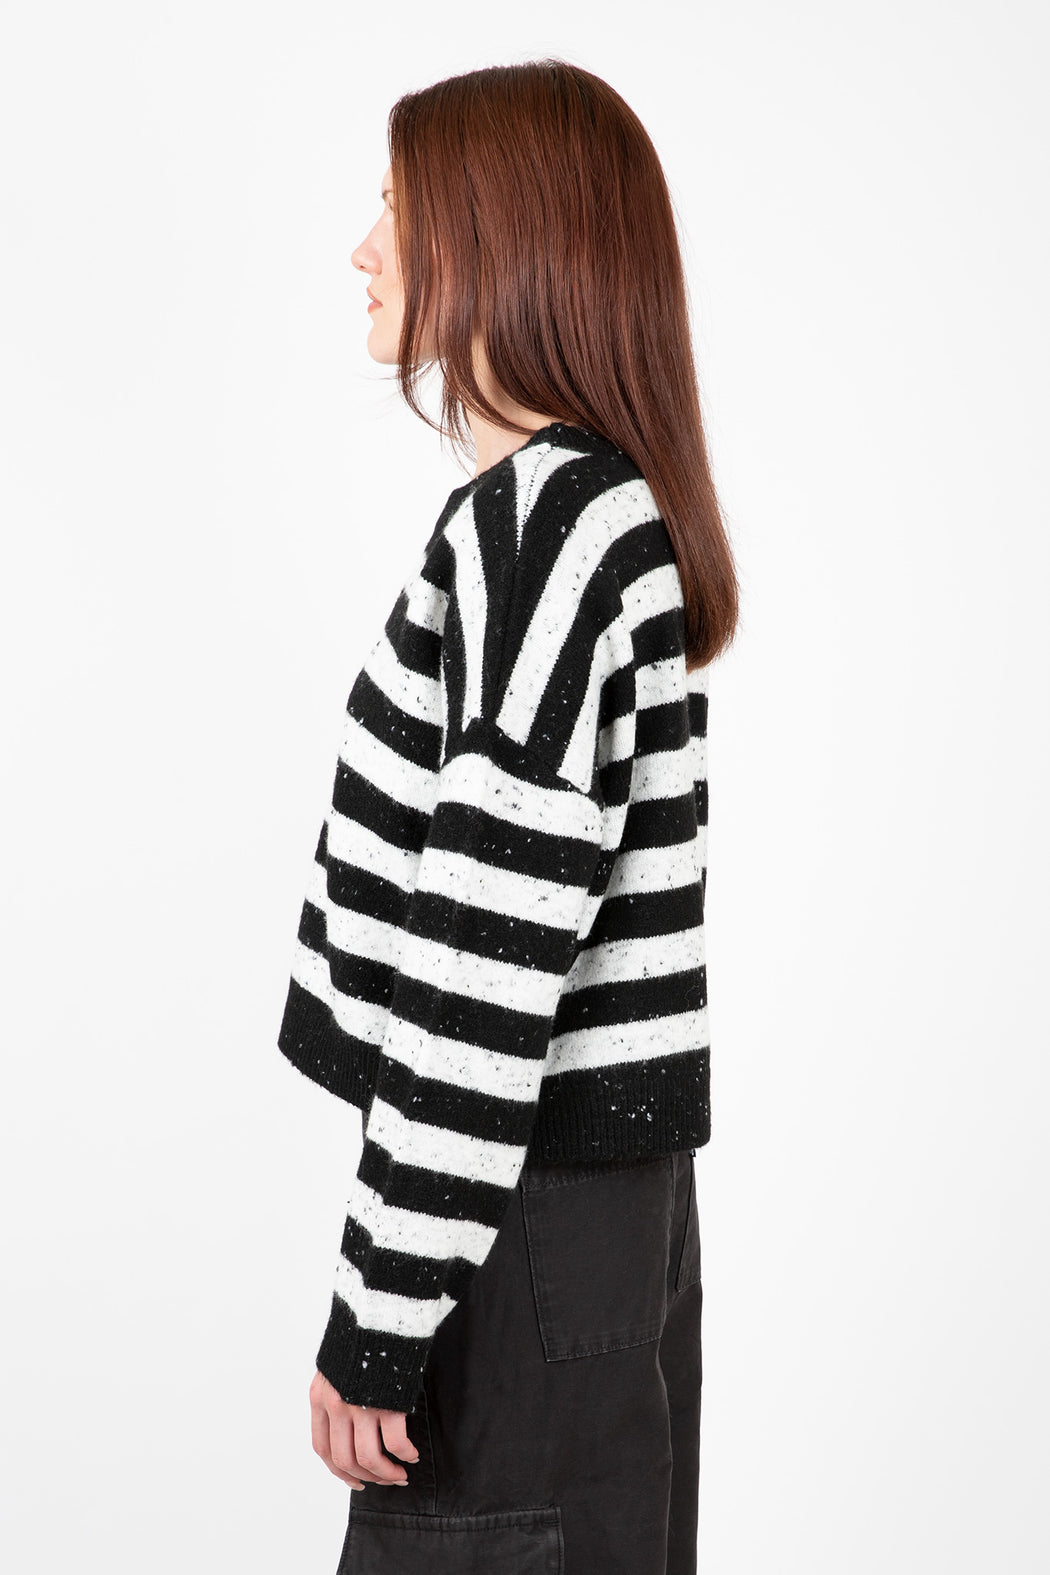    Lyla-Luxe-Jessie-Striped-Sweater-Black-White-Fleck